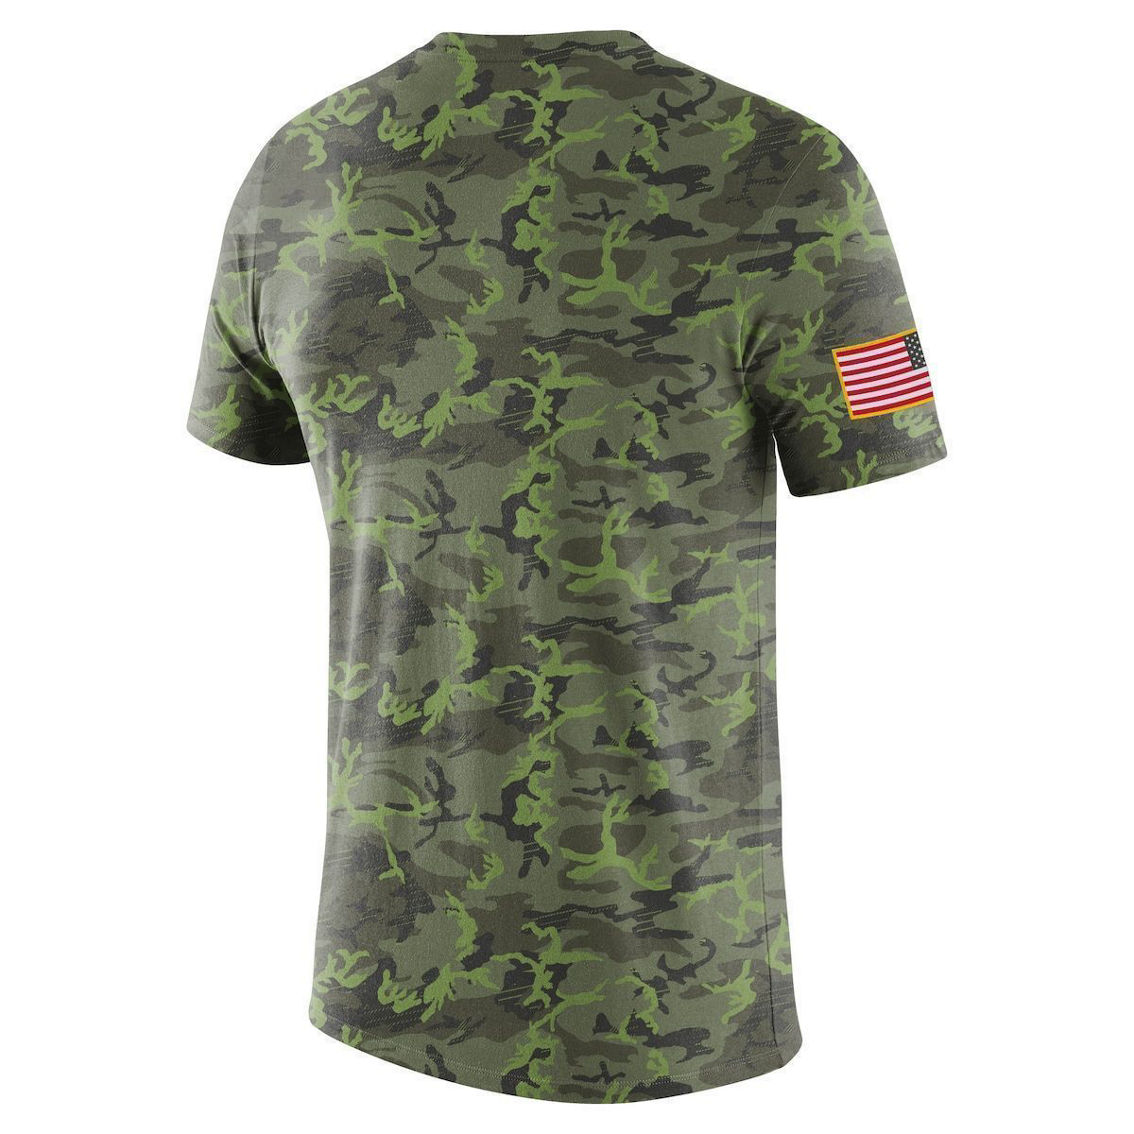 Nike Men's Camo Ohio State Buckeyes Military T-Shirt - Image 4 of 4